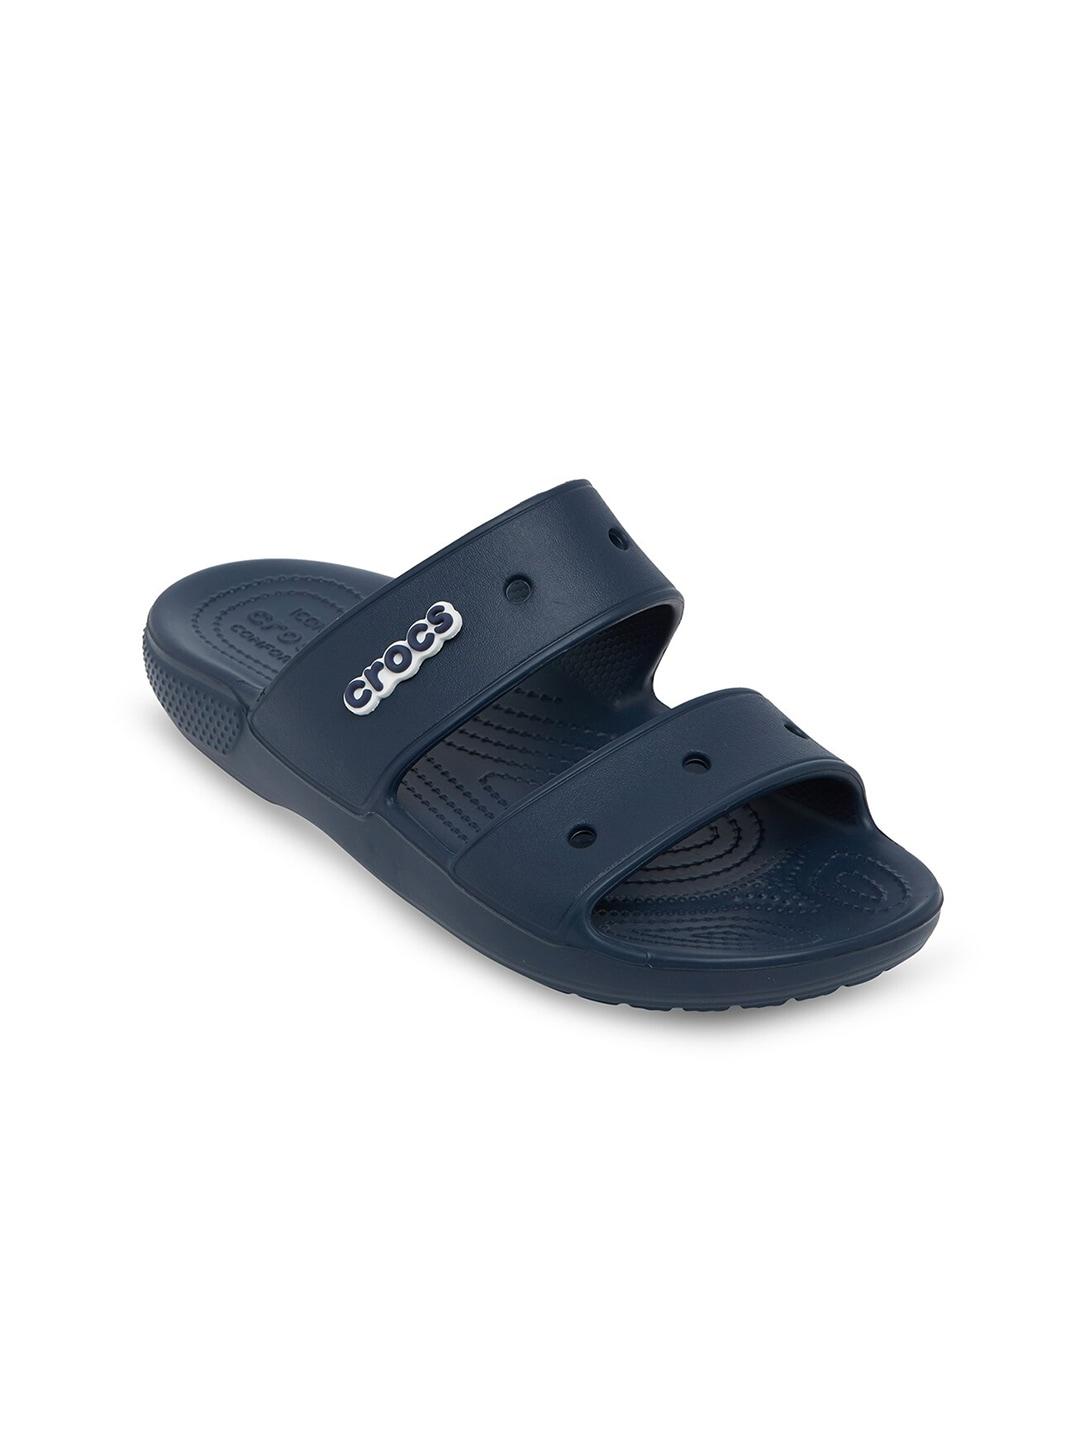 crocs-classic-unisex-navy-blue-comfort-sandals